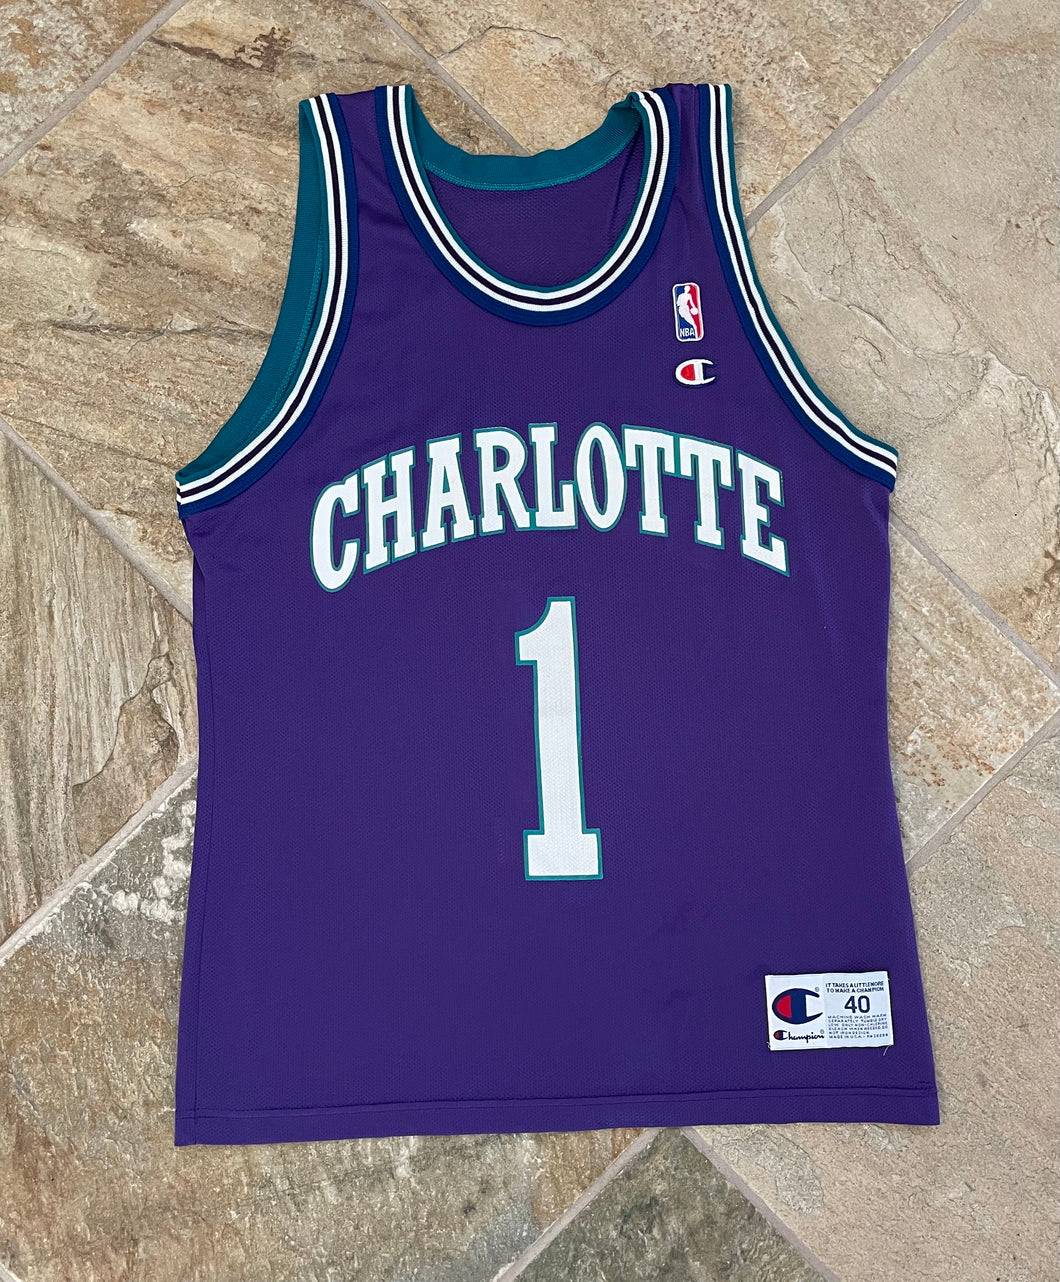 Vintage Charlotte Hornets Muggsy Bogues Champion Basketball Jersey, Size 40, Medium